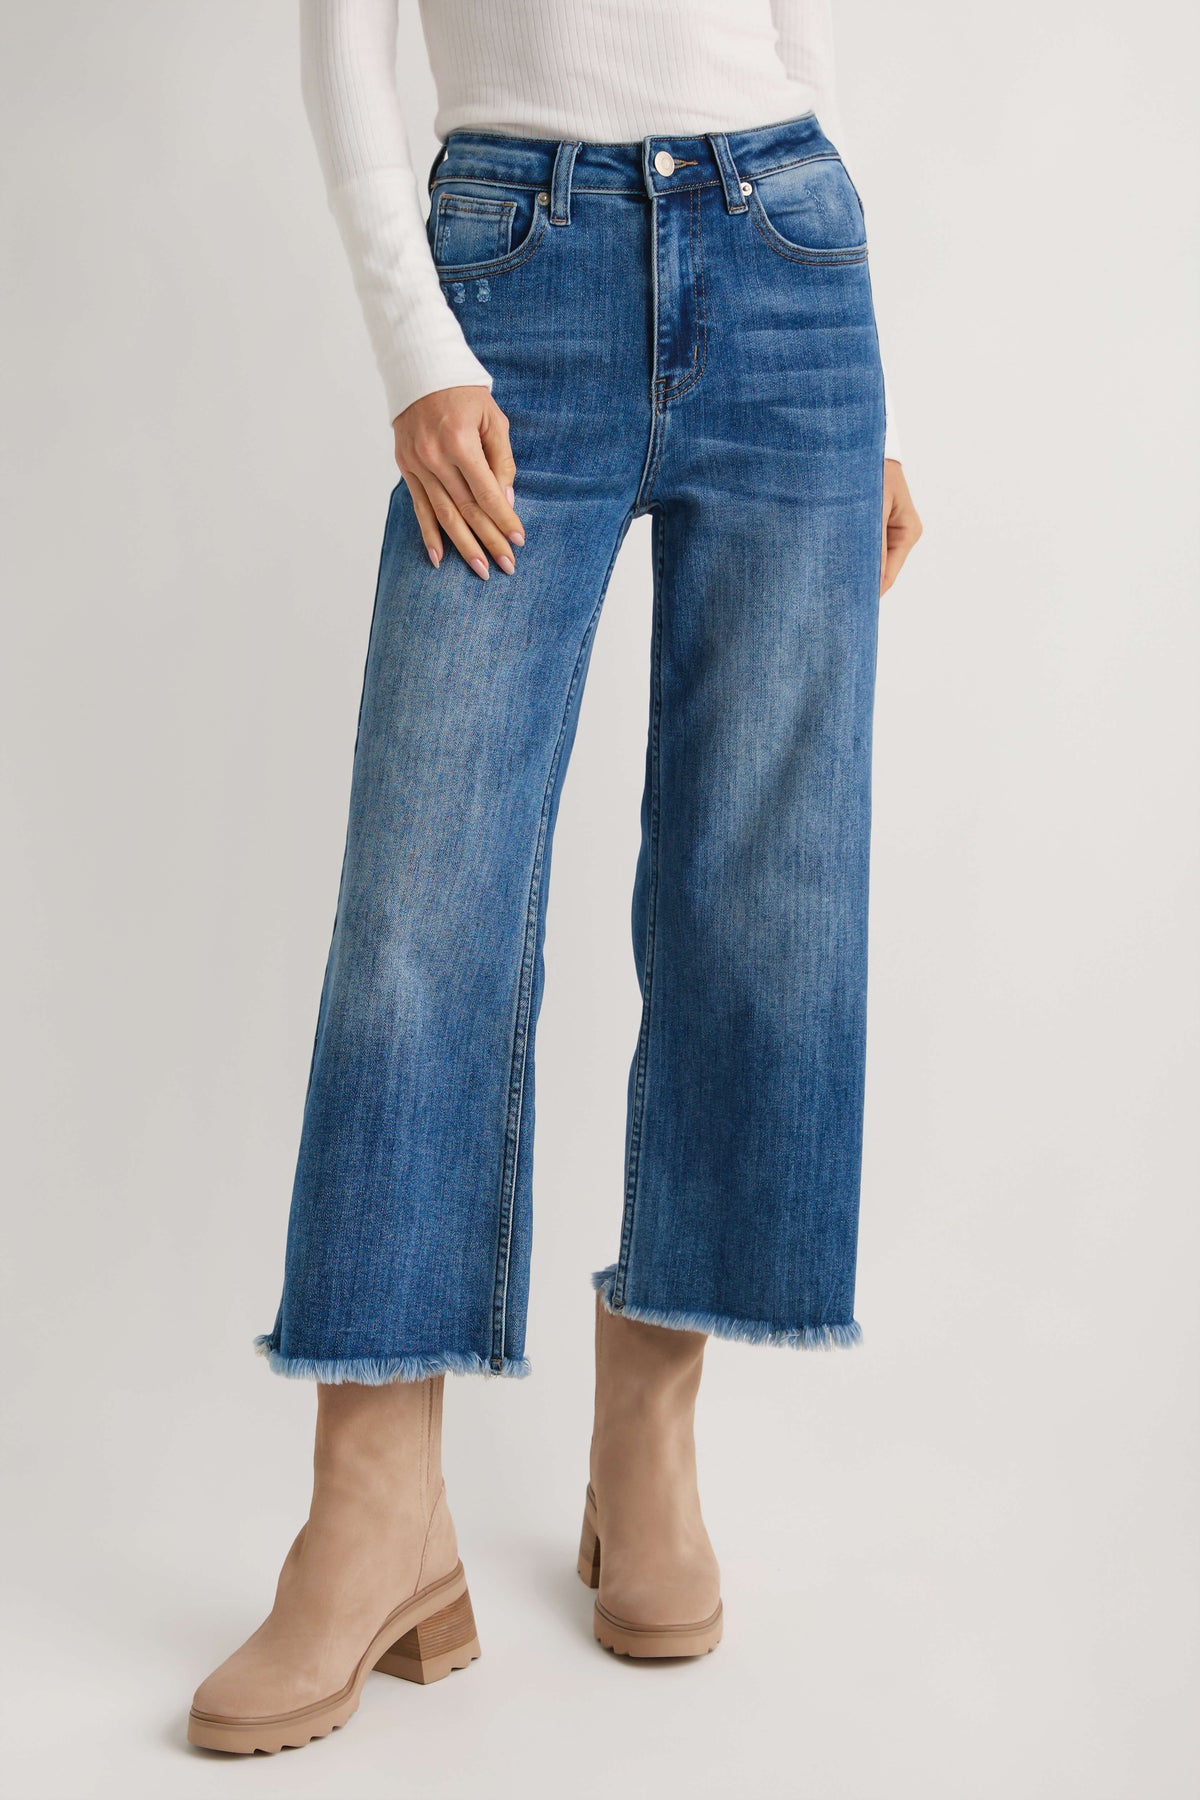 Lovemi - Ladies jeans  Women jeans, Denim pants women, Pants for women